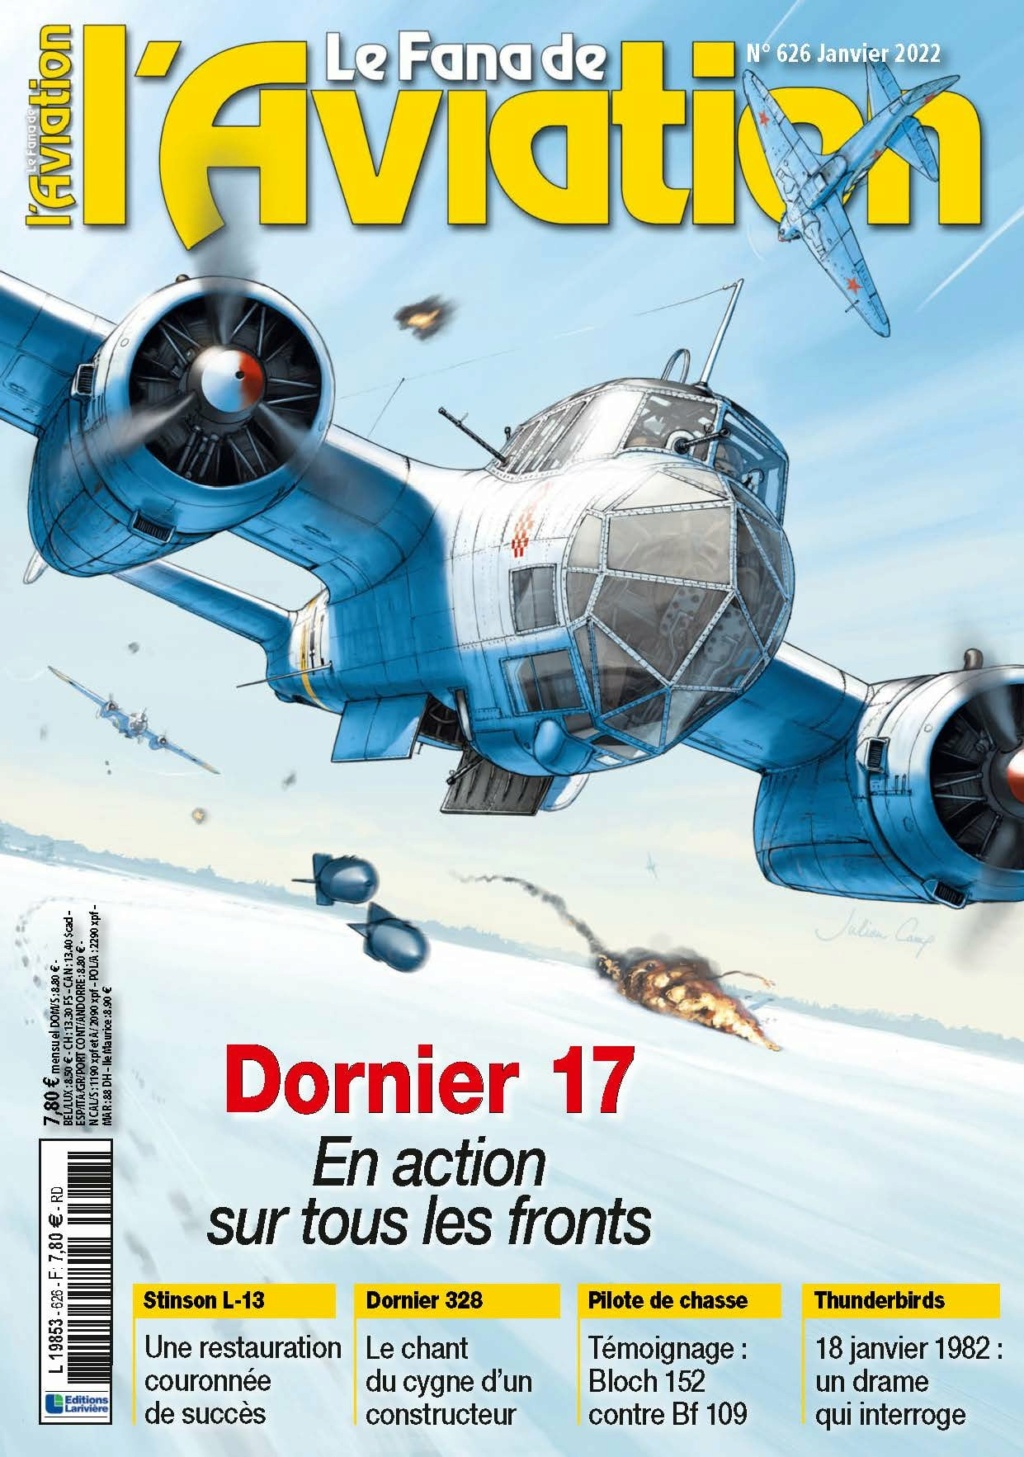 Dornier Do 17Z - Airfix - 1/72 - Page 2 Le-fan10